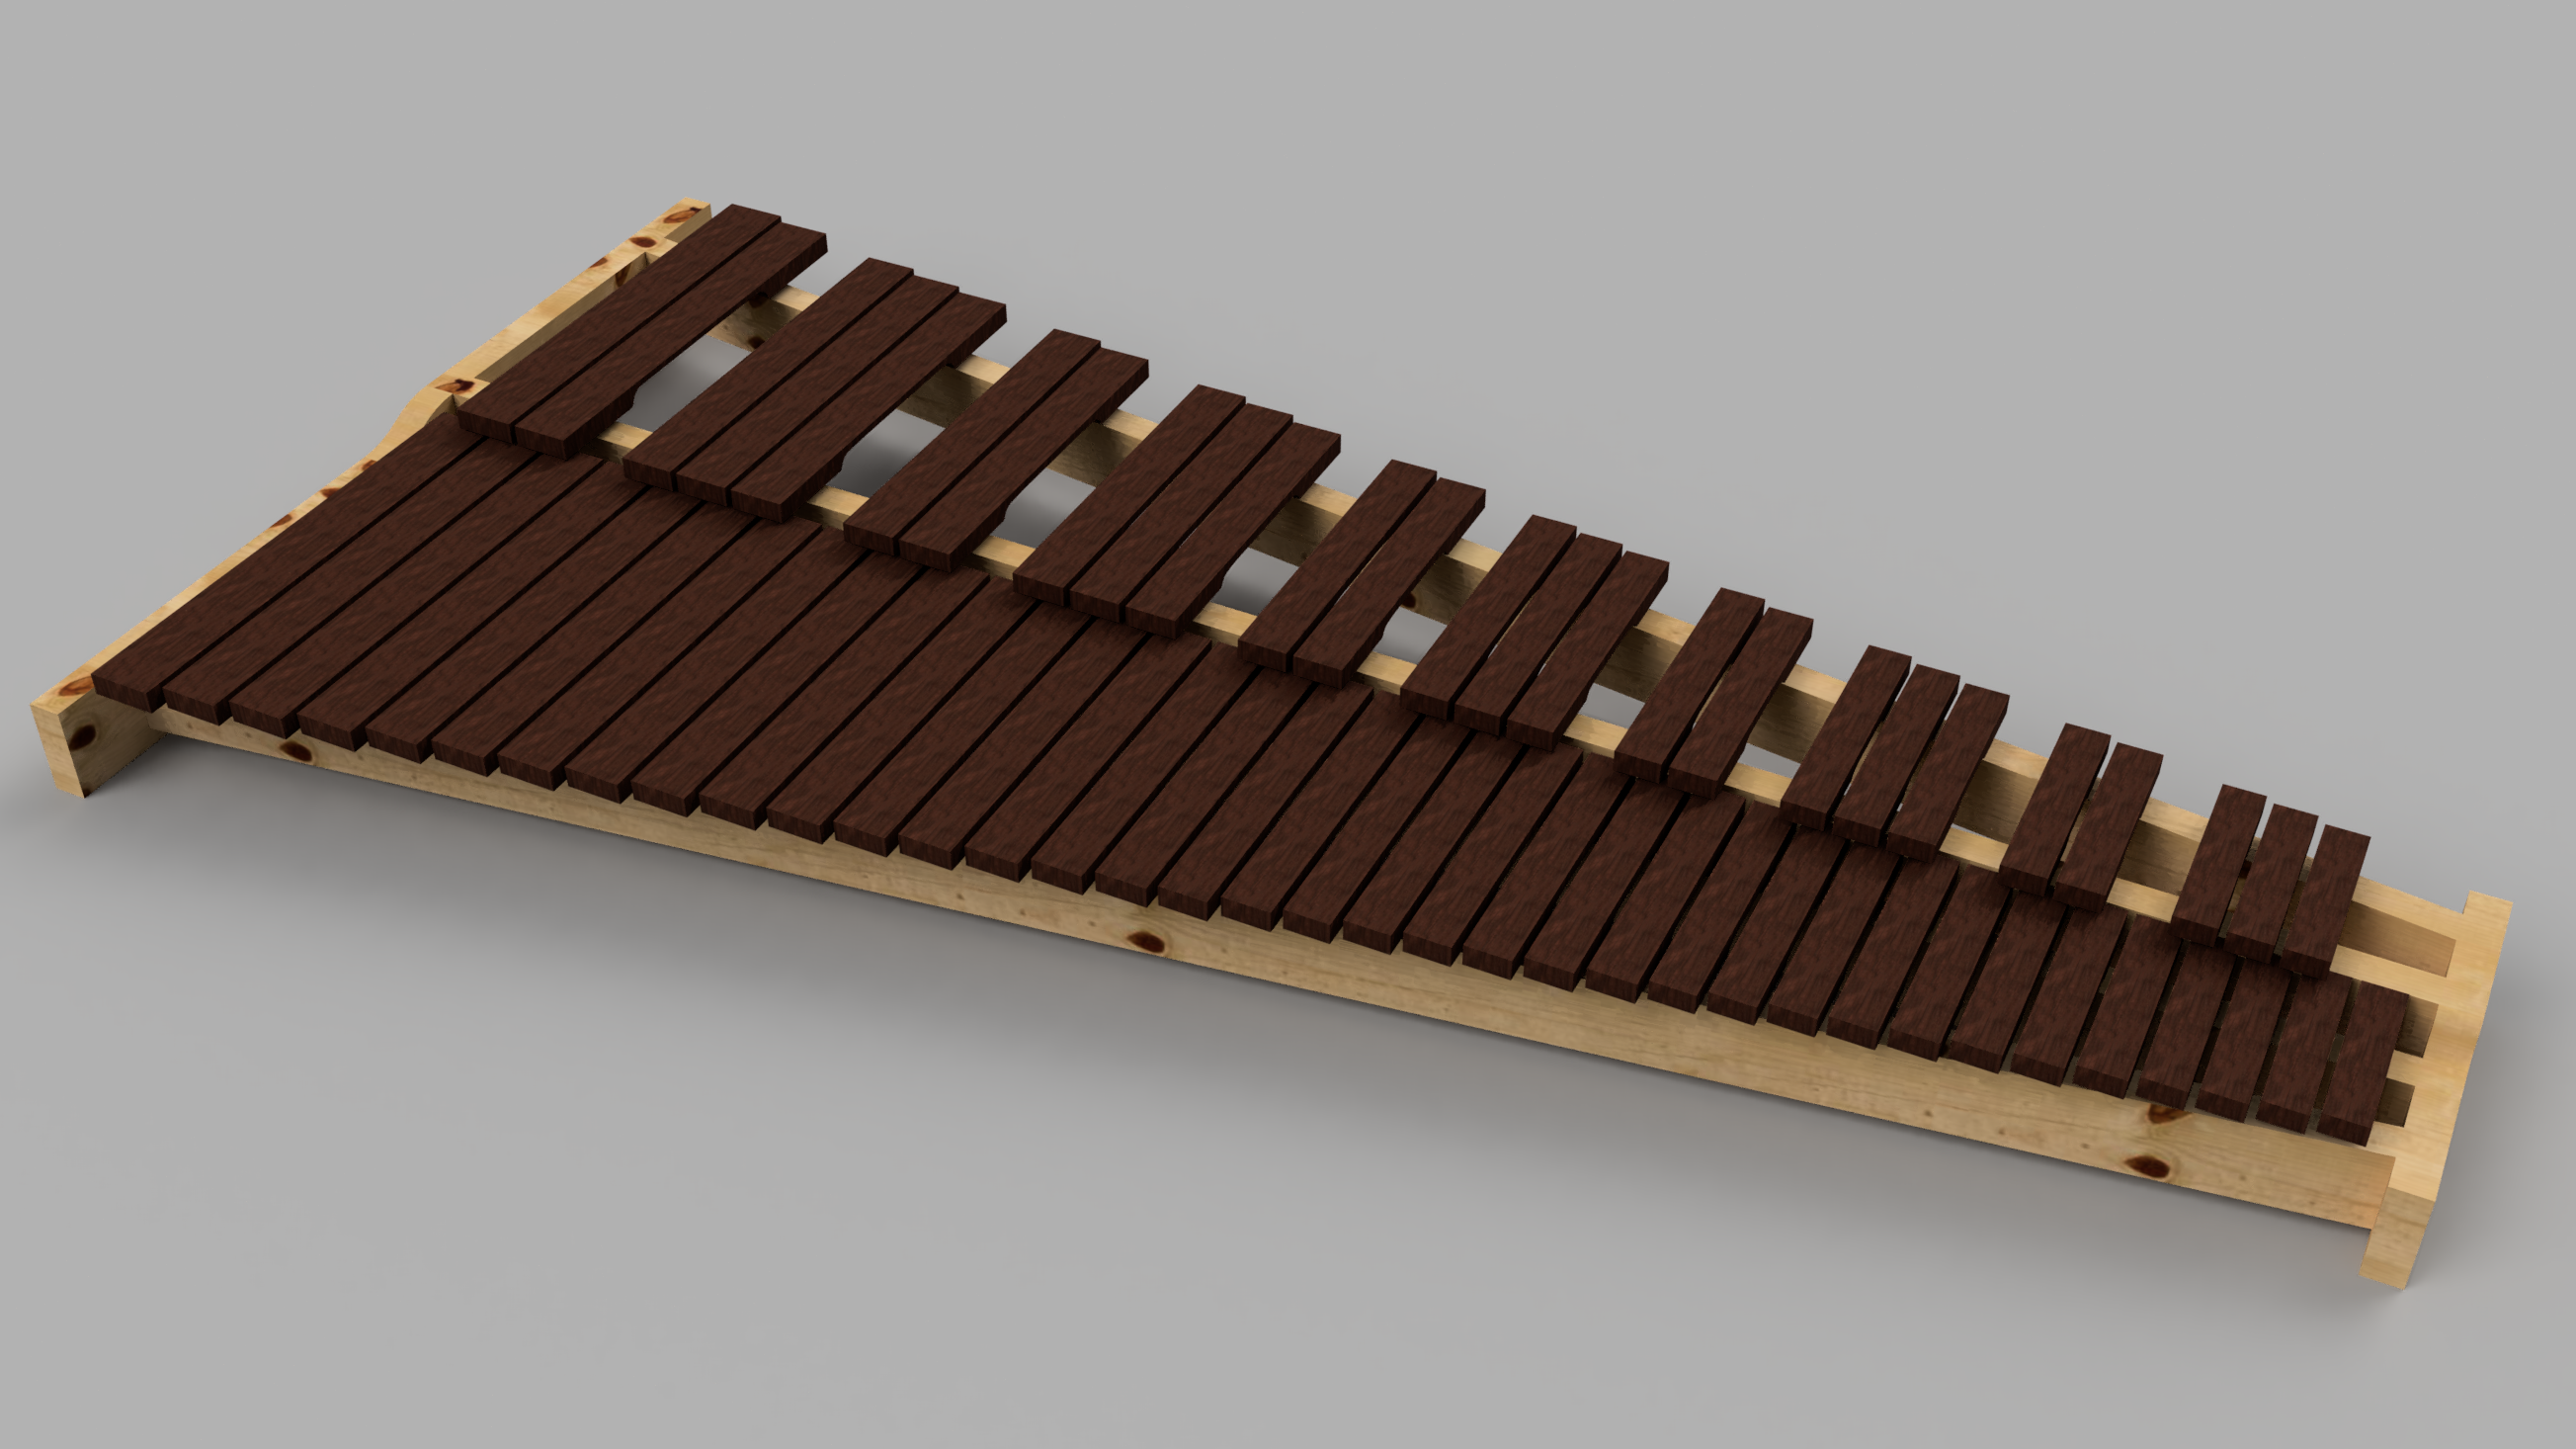 Render of the practice marimba